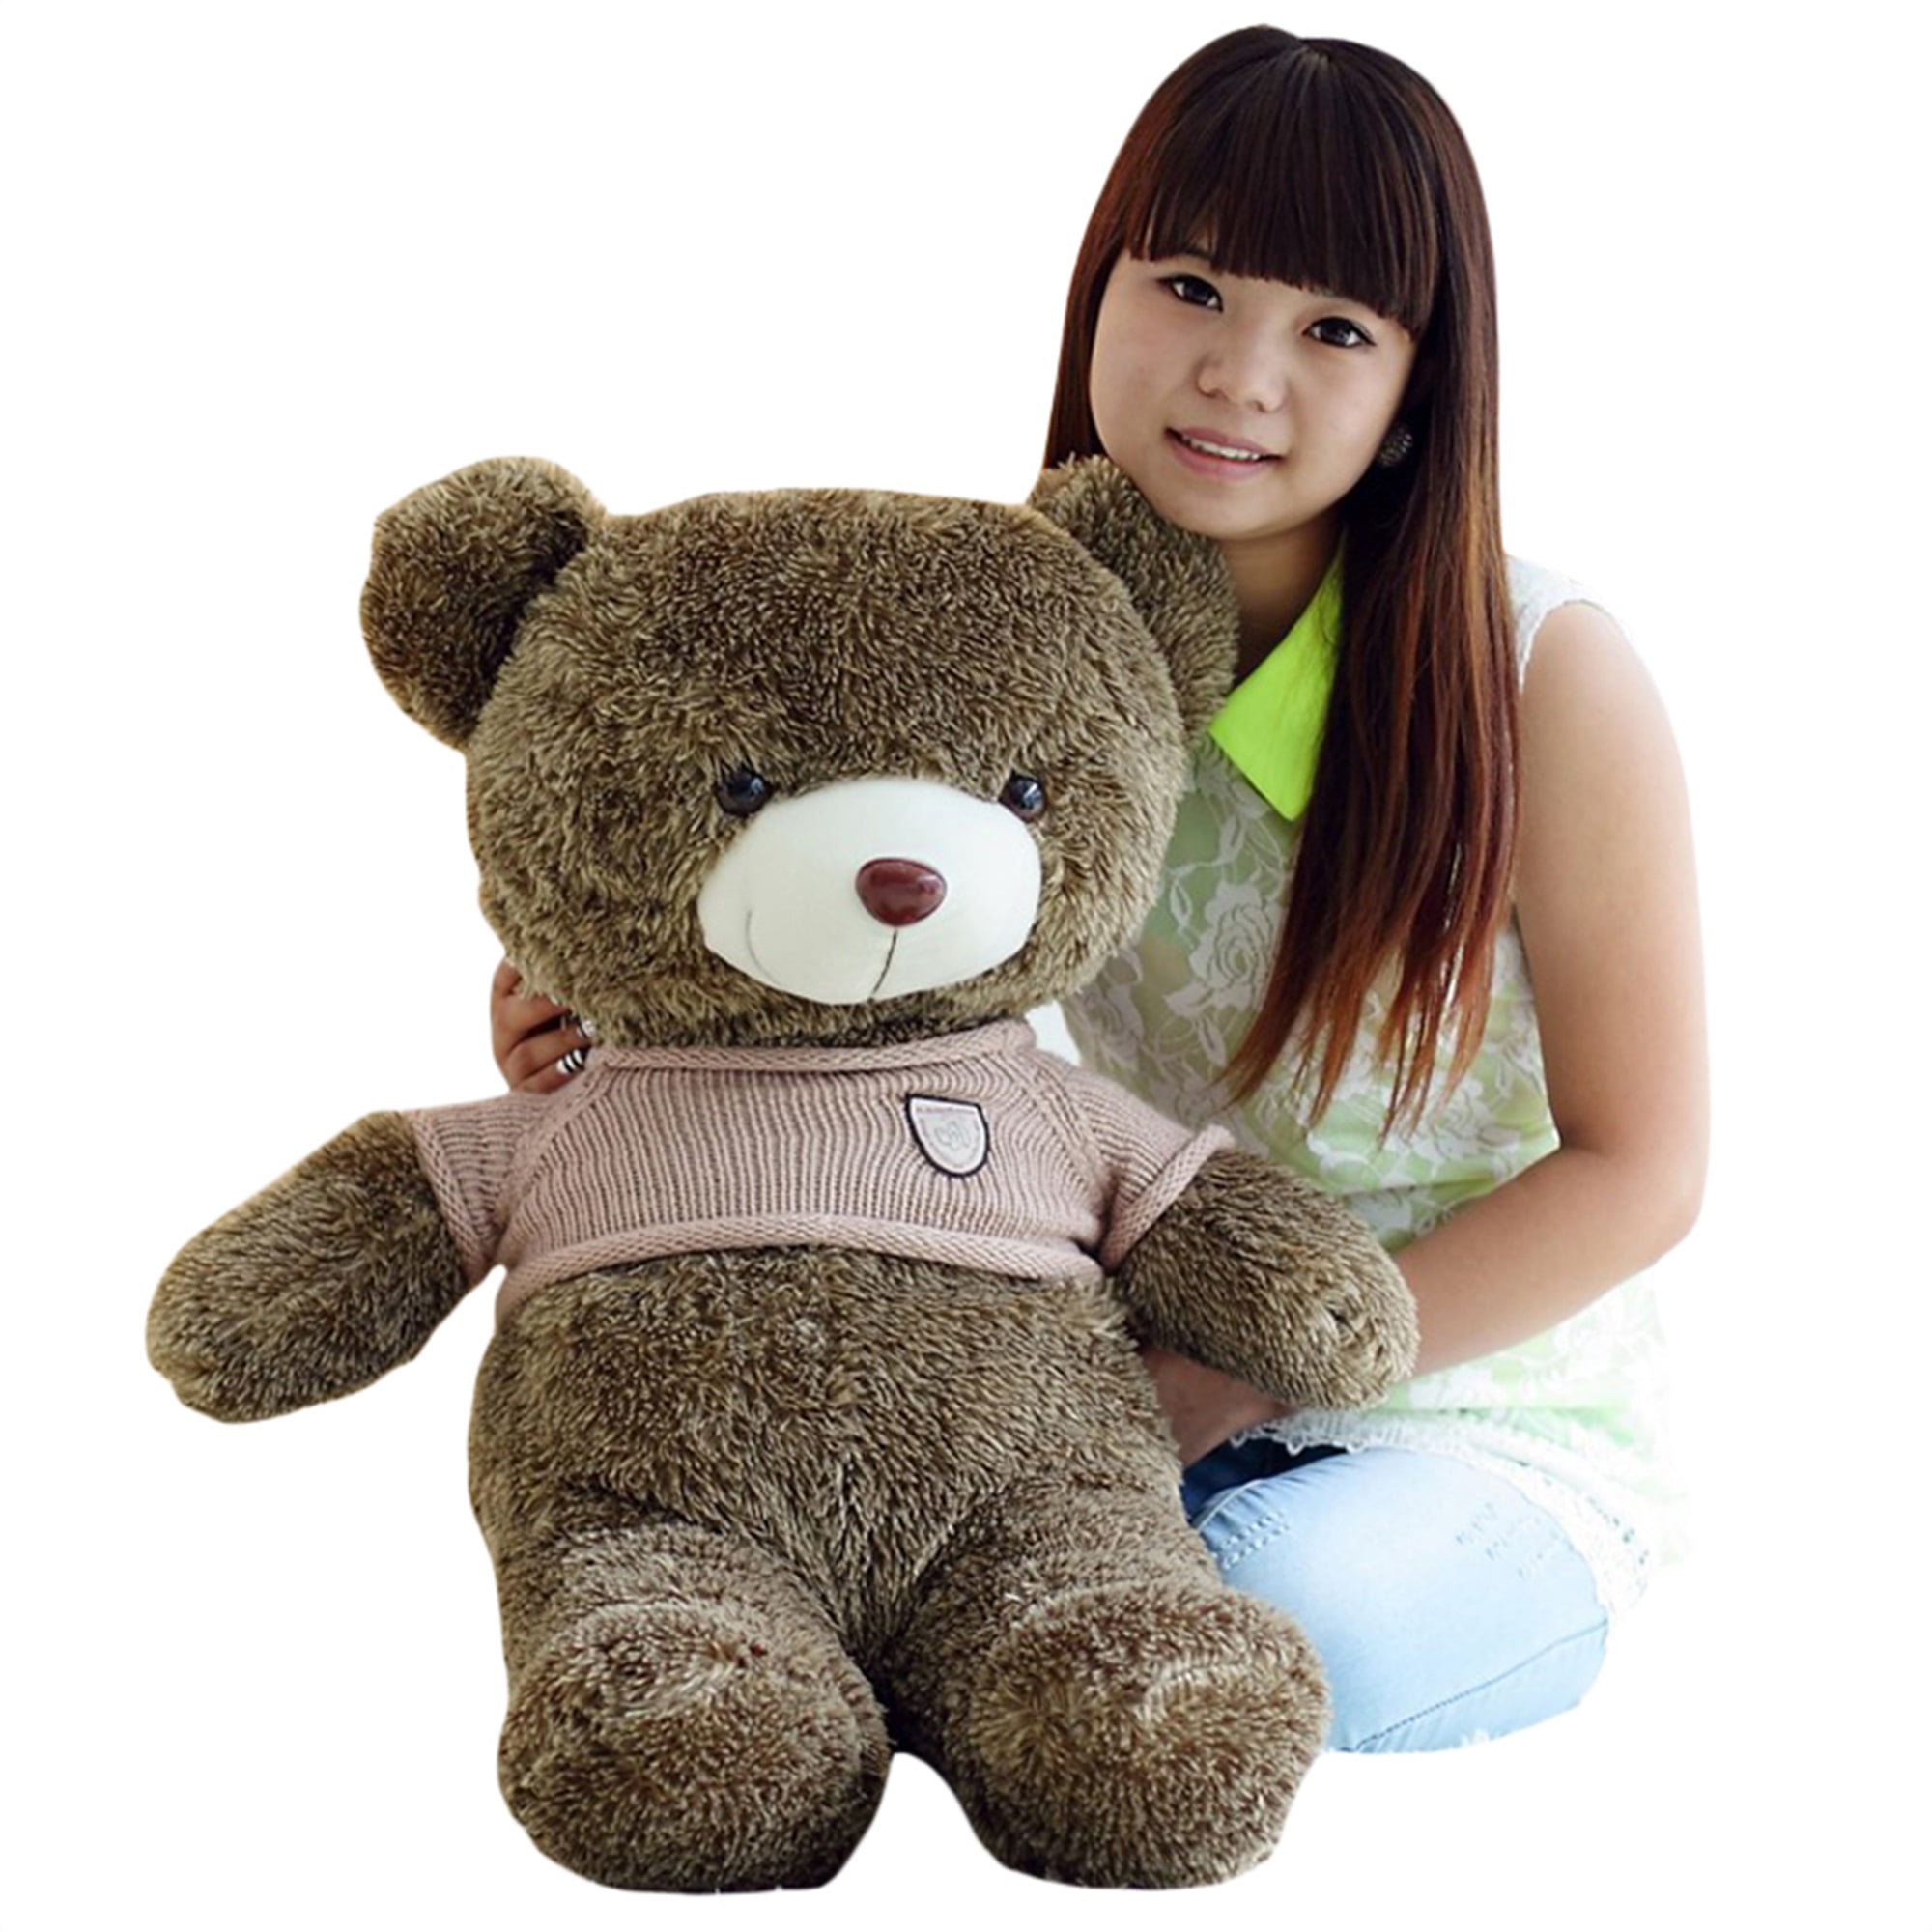 100cm Giant Big Teddy Bear Stuffed Soft Plush Animal Toy Kids Birthday Gifts 